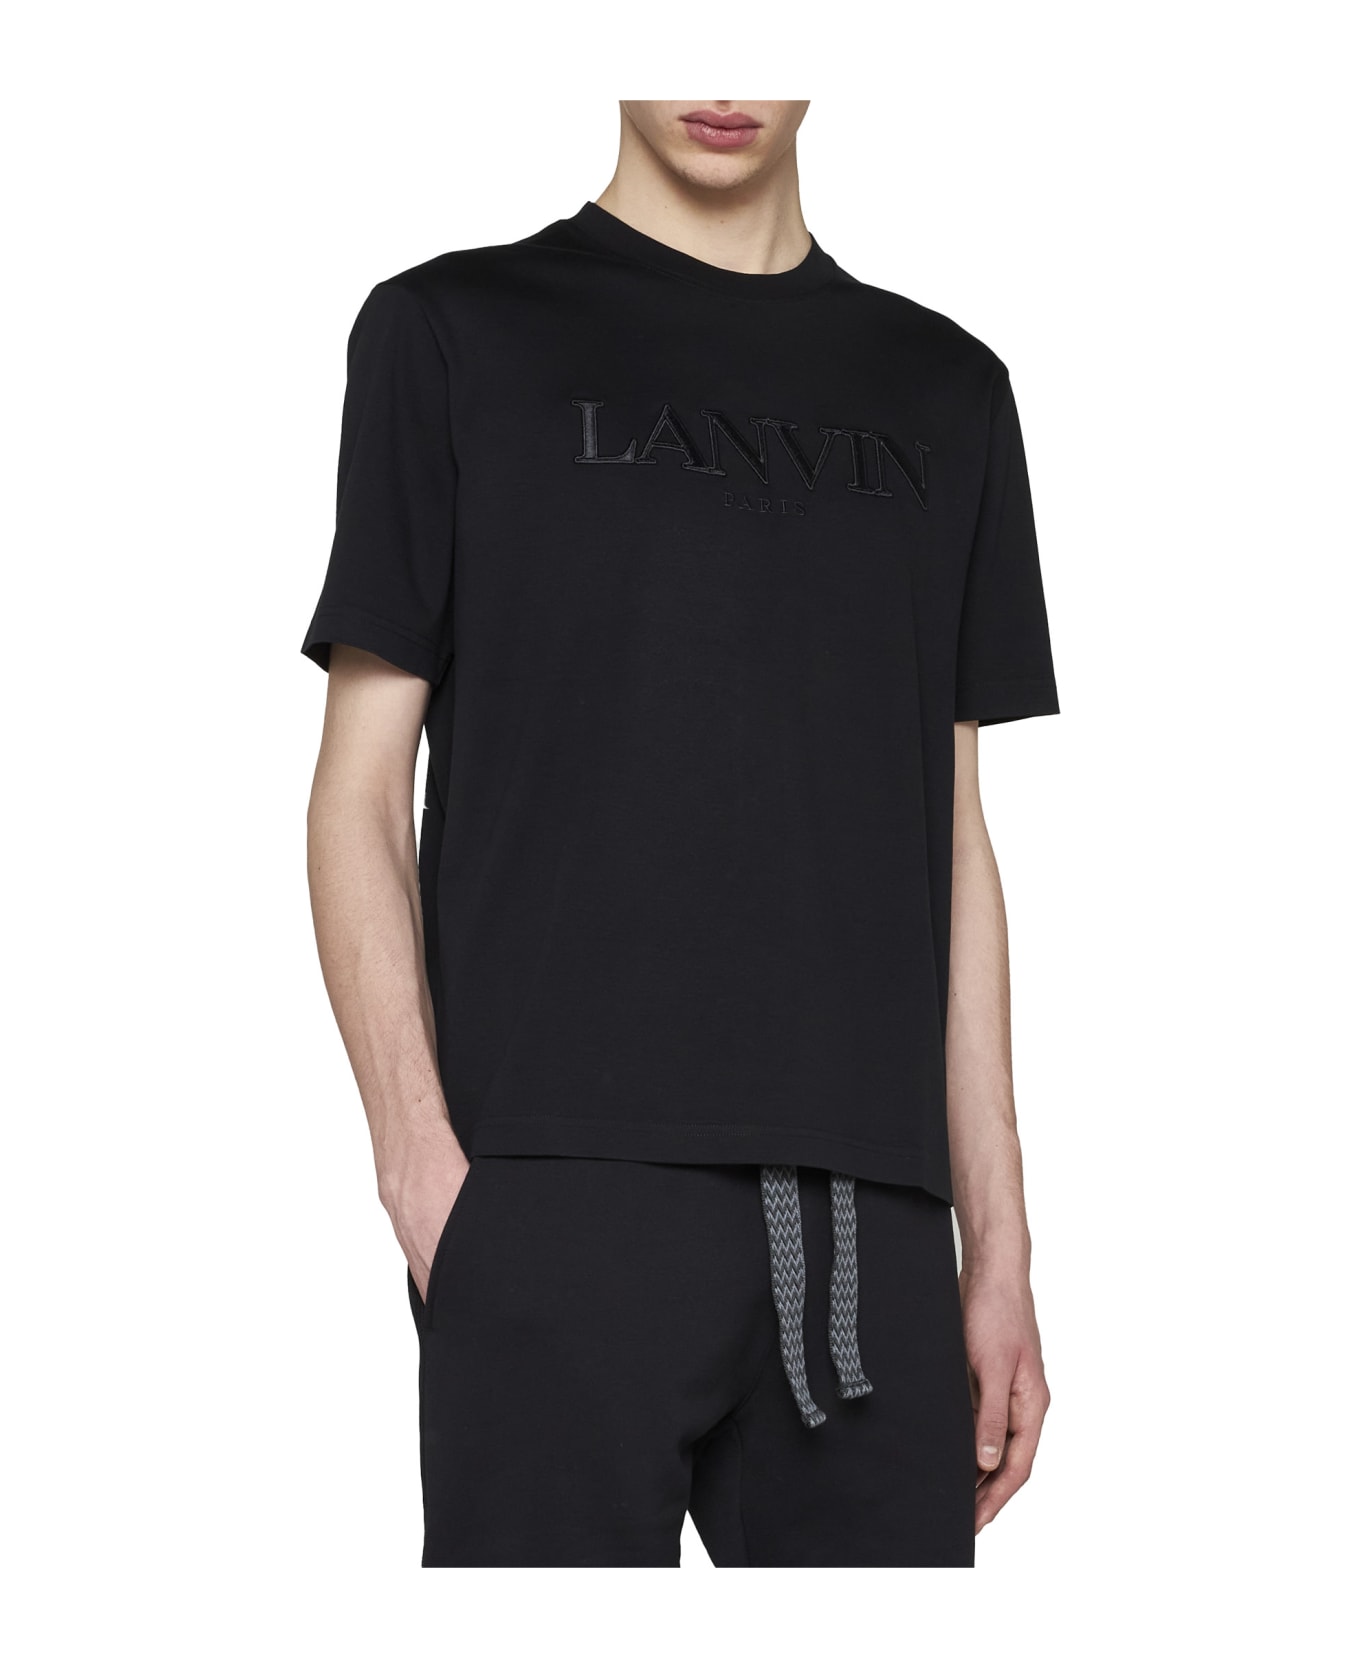 Lanvin T-Shirt - Black